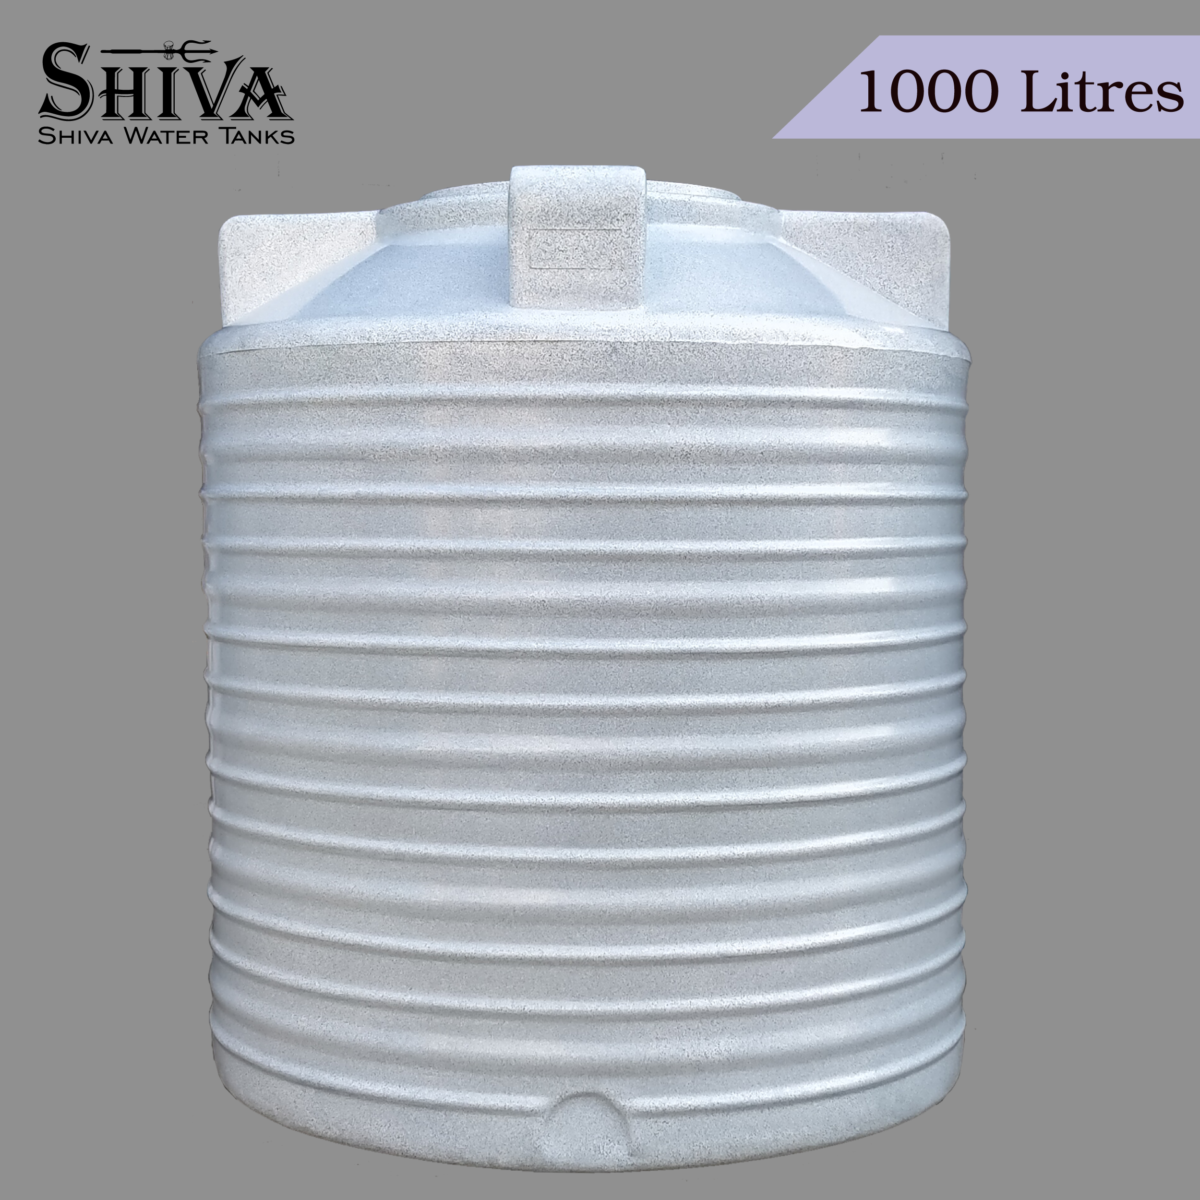 1000 Litres - SHIVA U-Form - 4 Layers